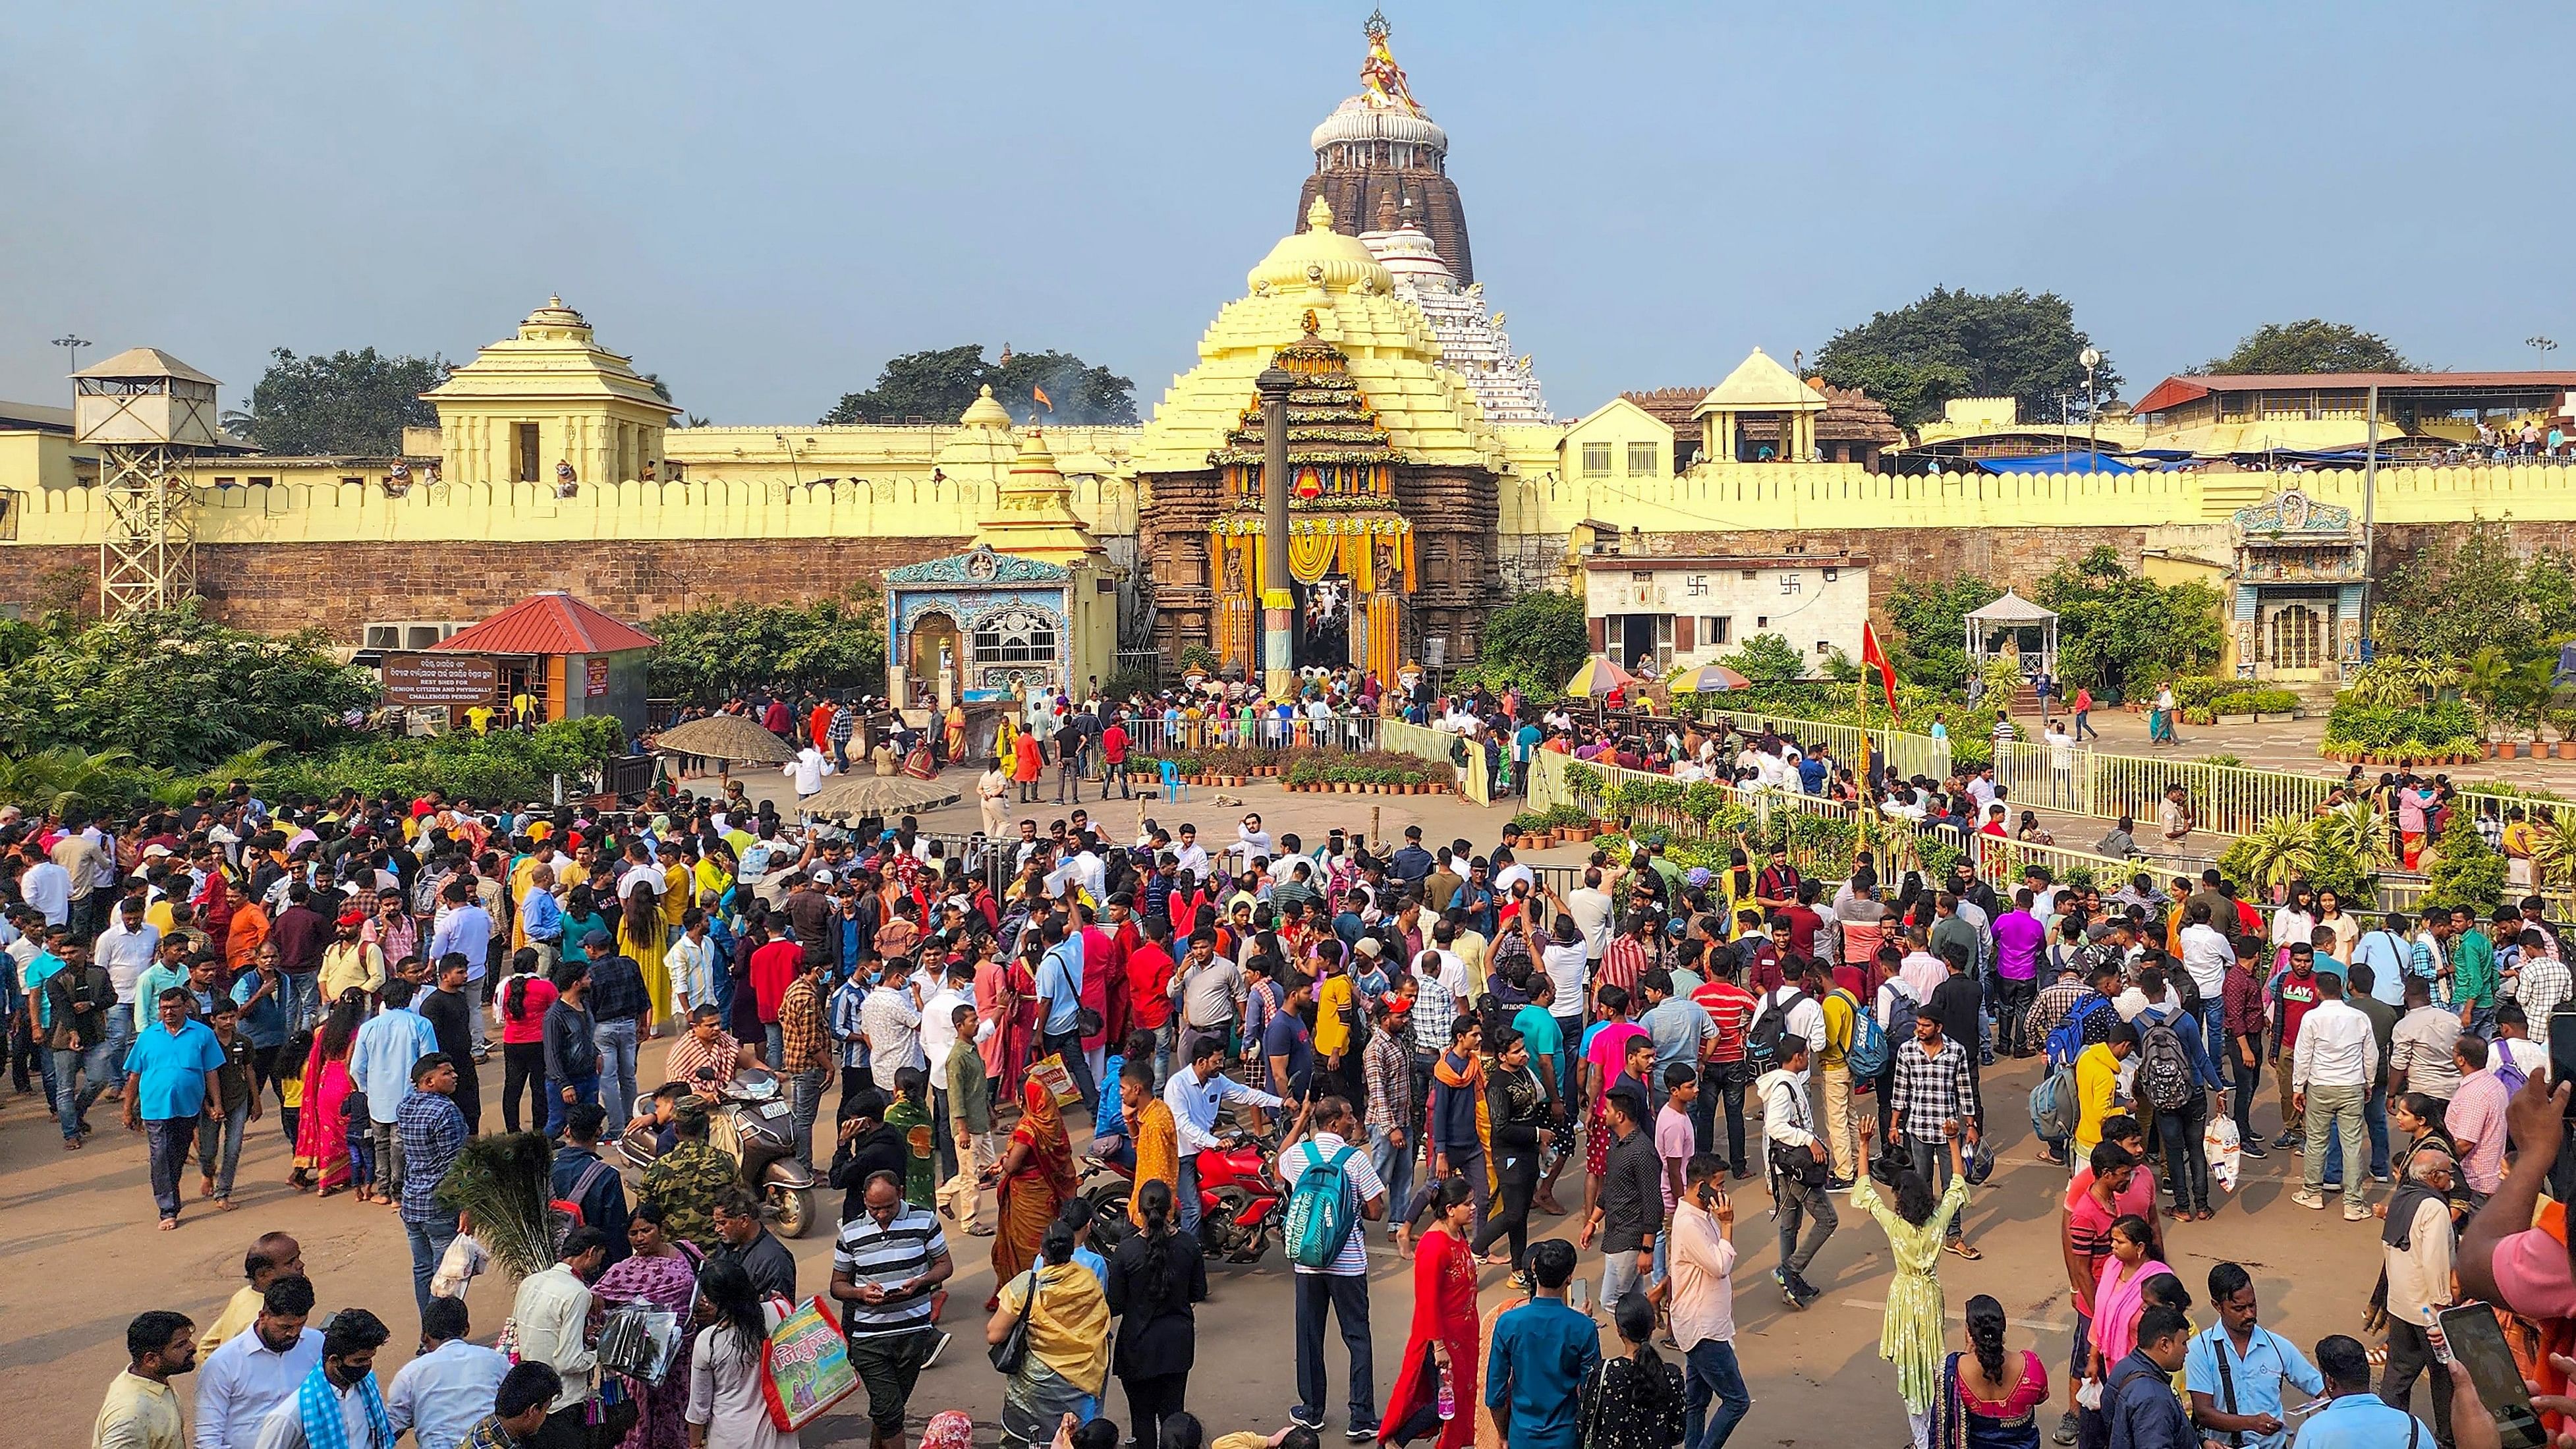 <div class="paragraphs"><p>File Photo: Devotees throng the Shree Jagannath temple in Puri.&nbsp;</p></div>